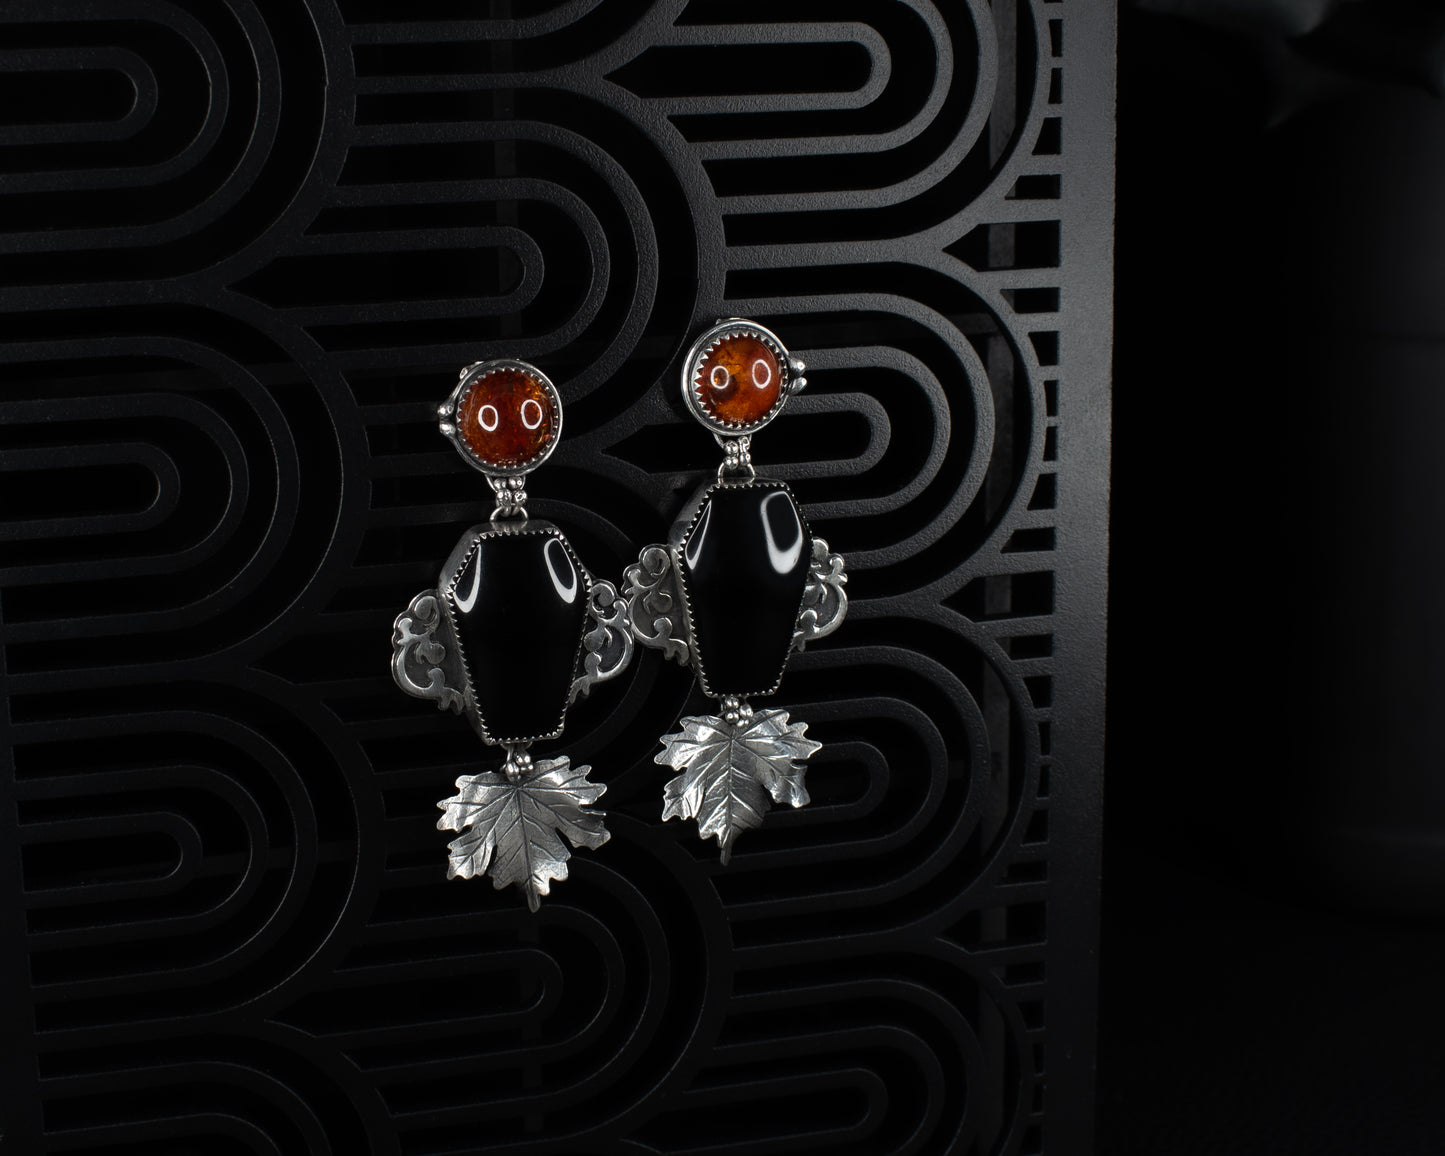 EKRJ648_ Amber & Black Onyx, Maple leaves One-of-a-kind Handmade Silver Earrings